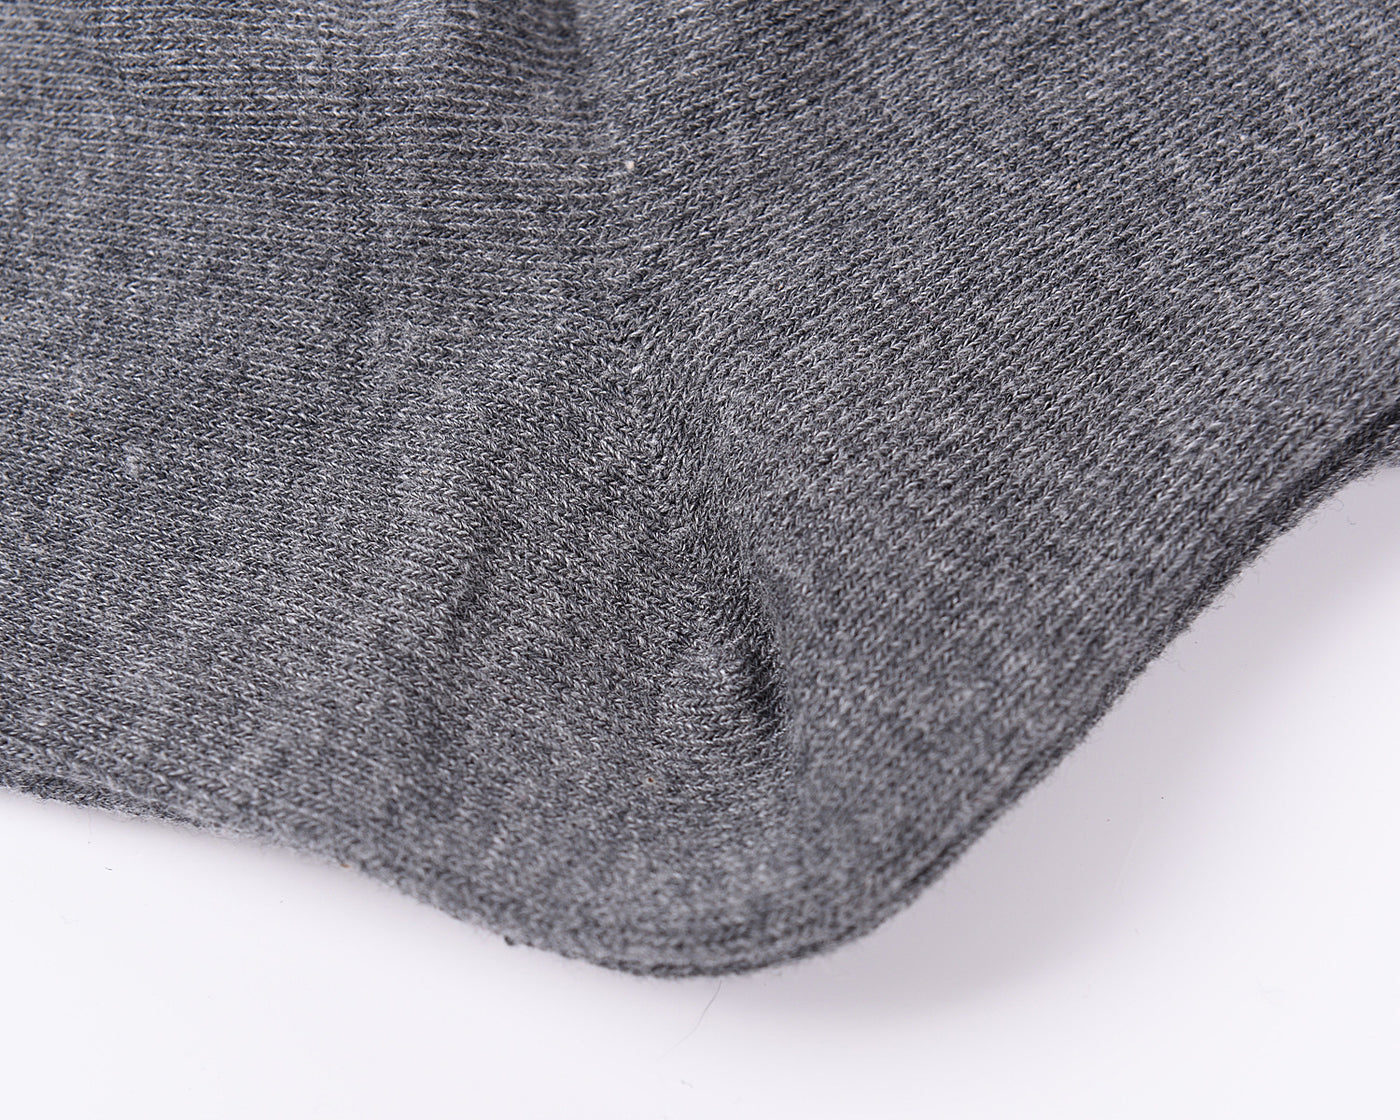 Finest Combed Cotton Knee High Socks - Plain Grey